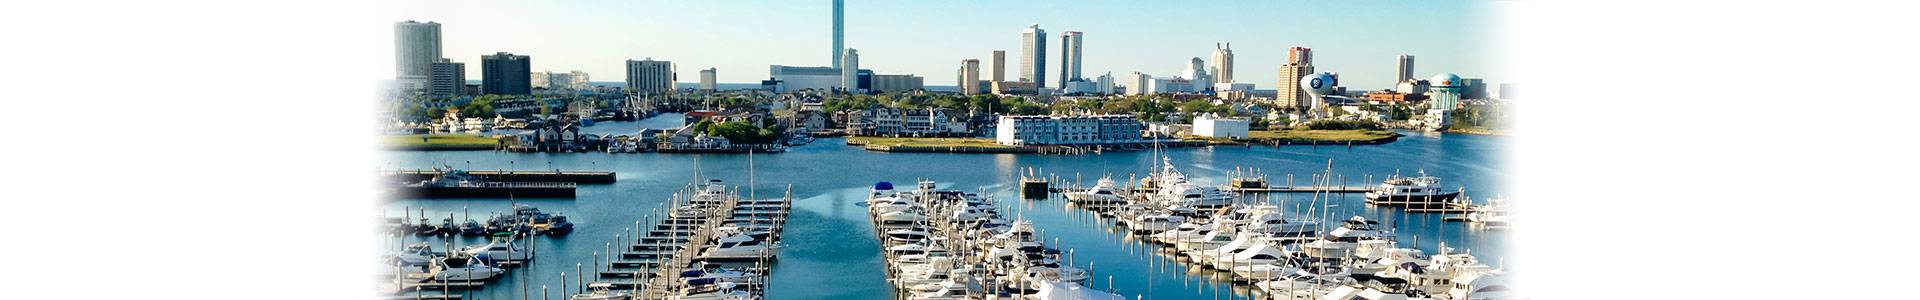 IRR-Coastal New Jersey Career Opportunities
